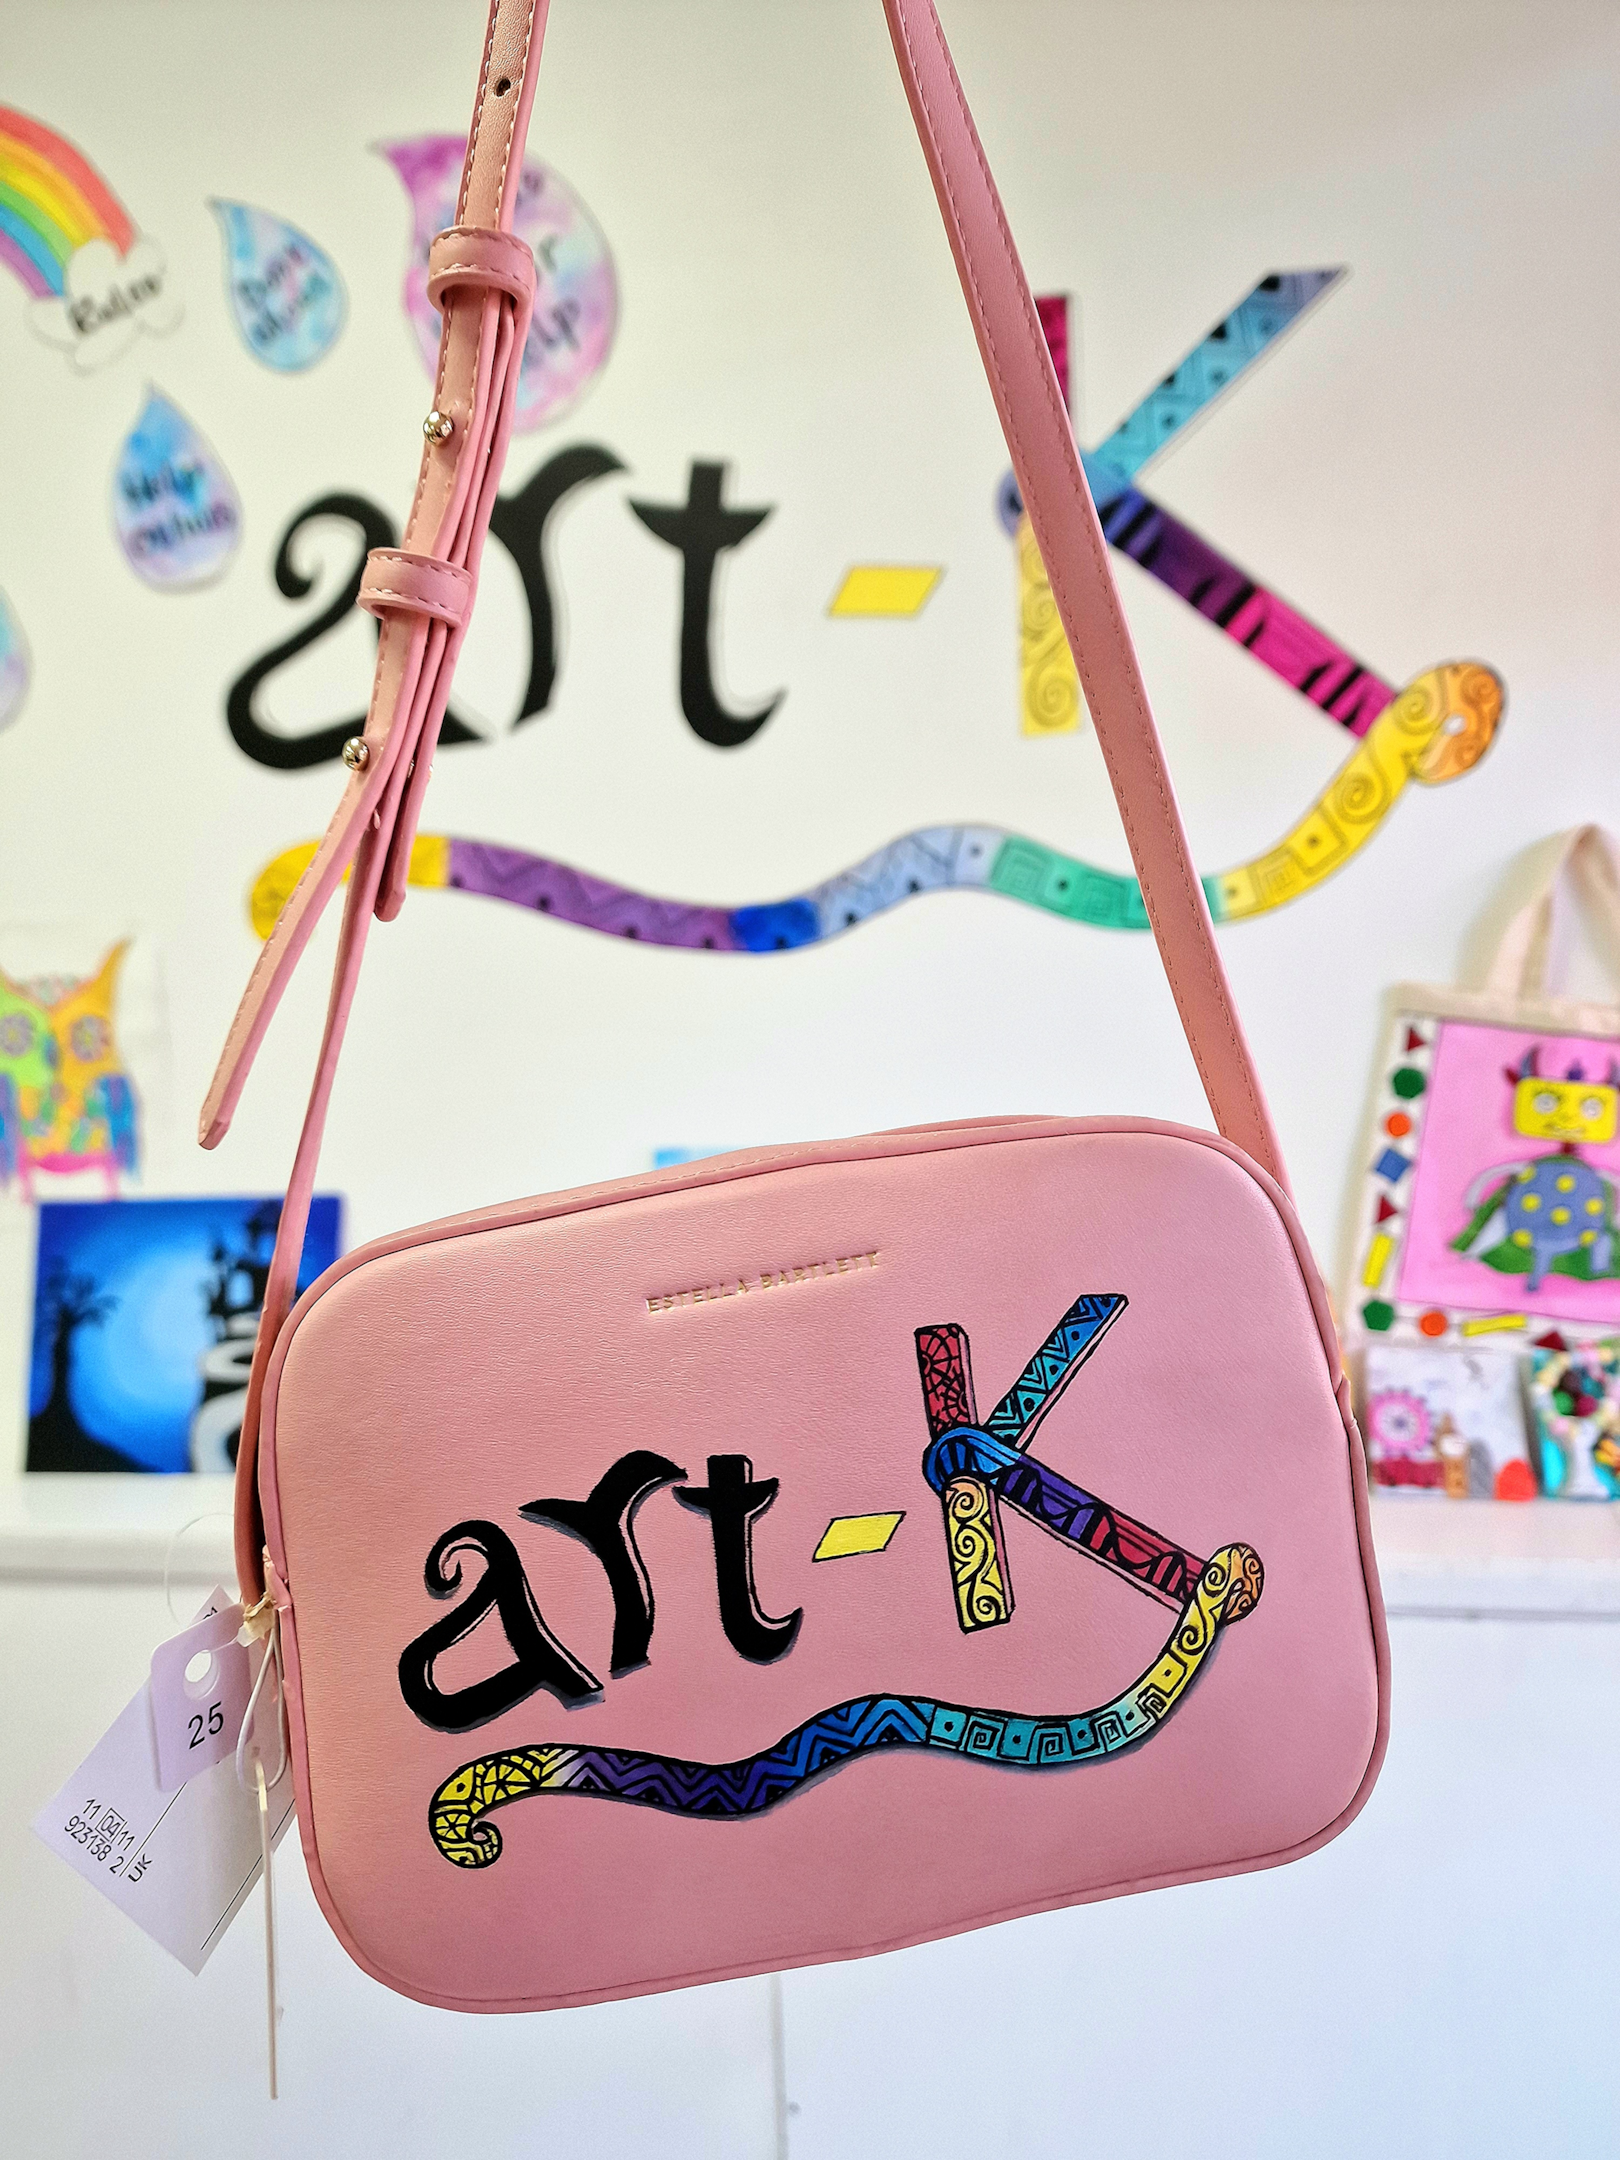 Custom hand painted pink bag for company: "art-K"